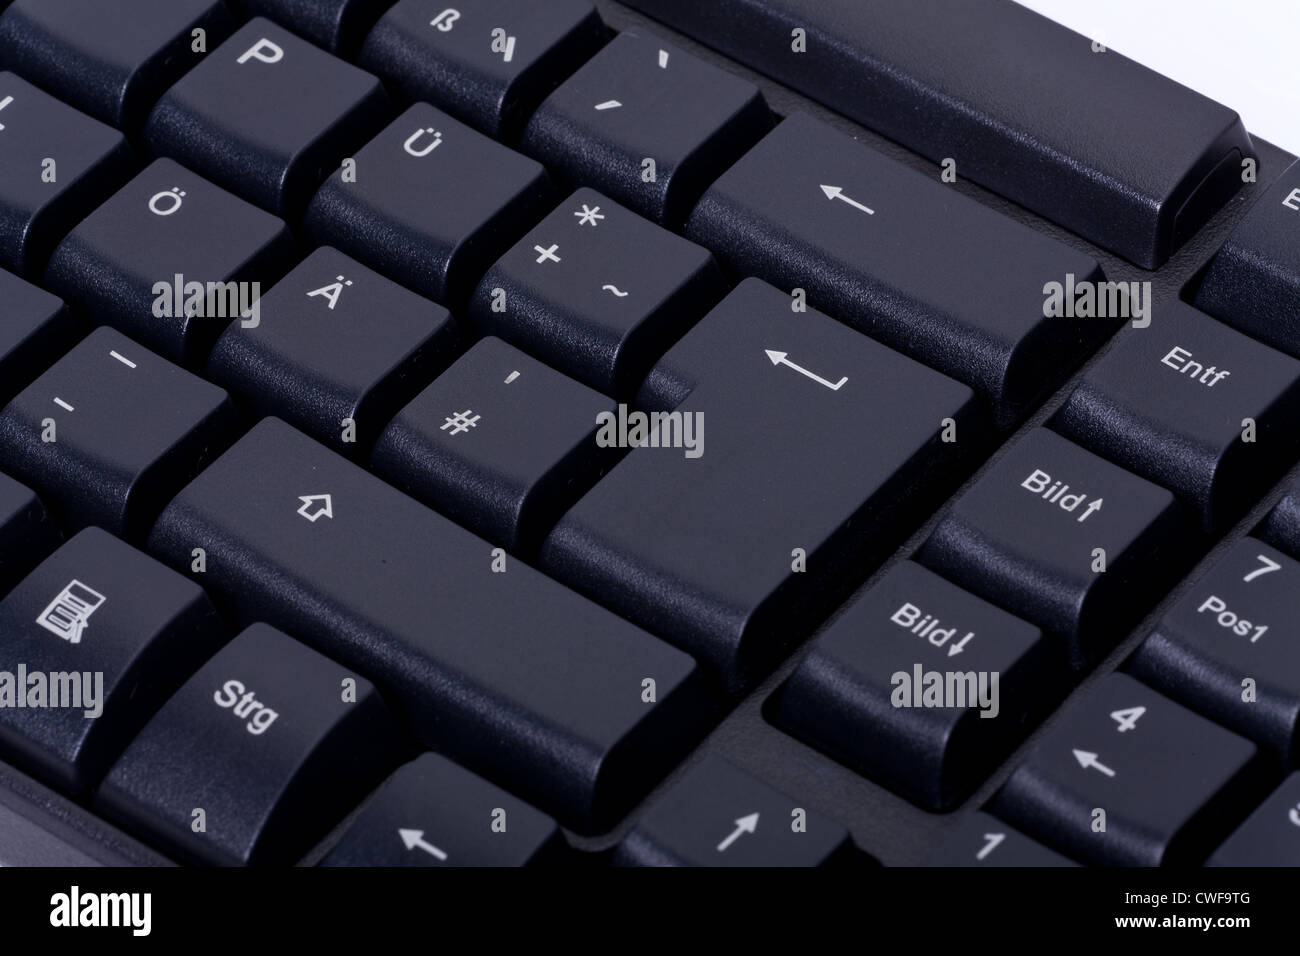 Enter Key Keyboard Black Stock Photos & Enter Key Keyboard Black Stock